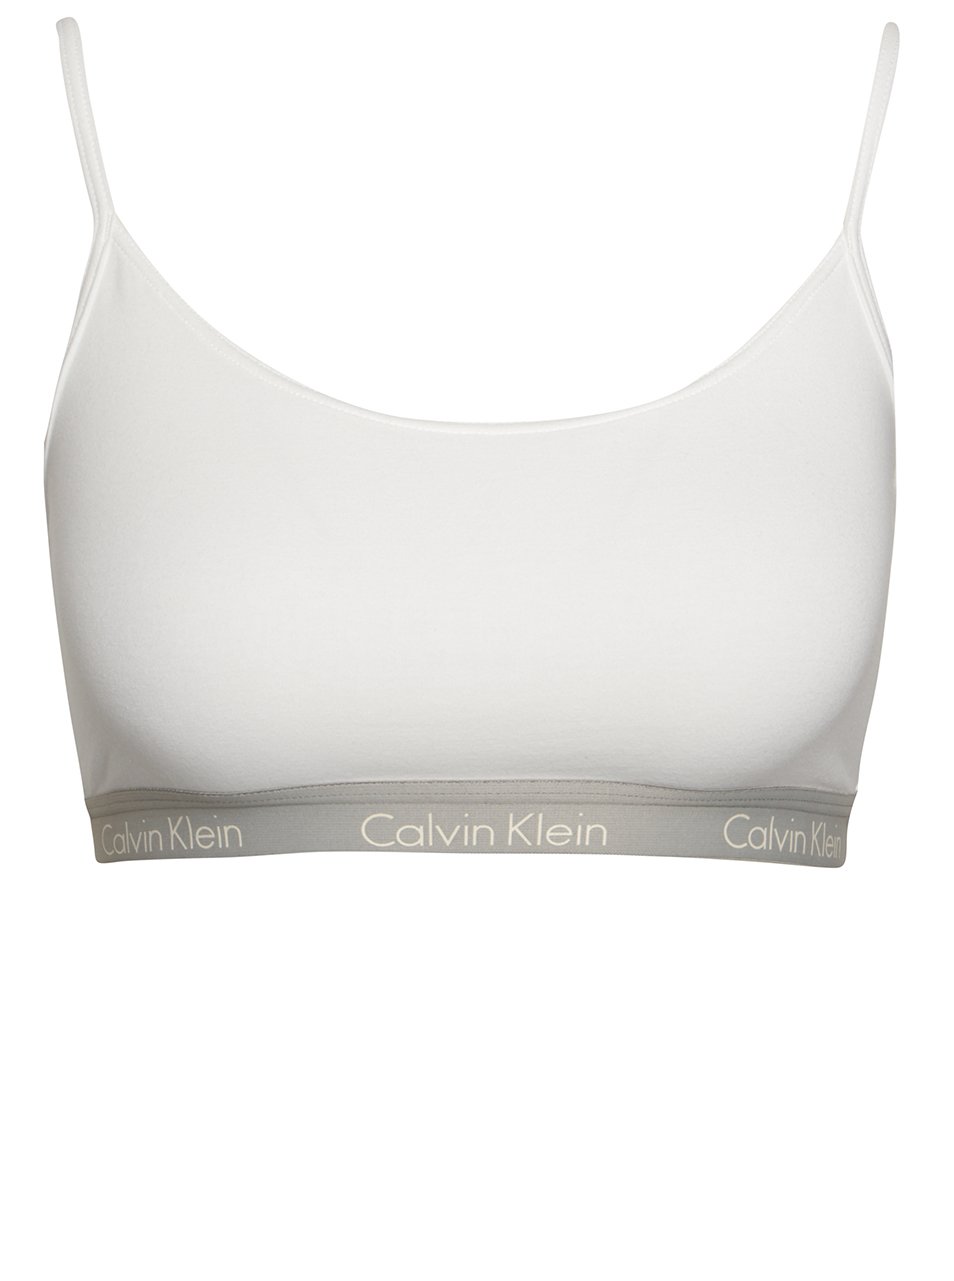 Bílá sportovní podprsenka Calvin Klein